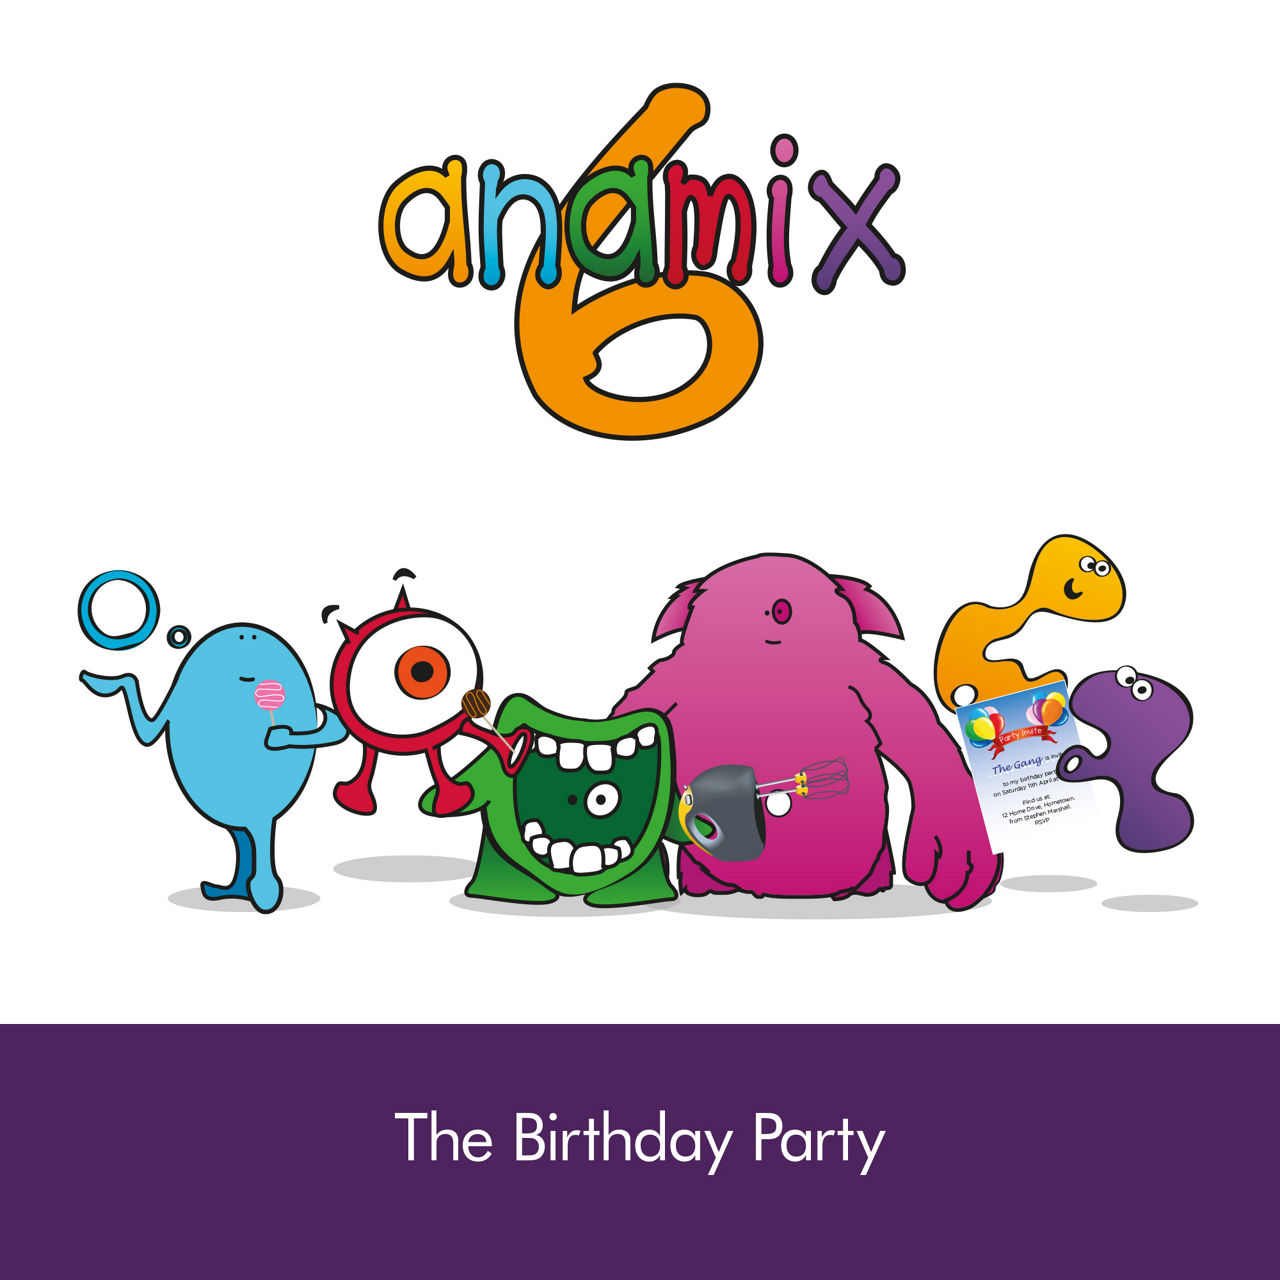 Anamix 6 The birthday party